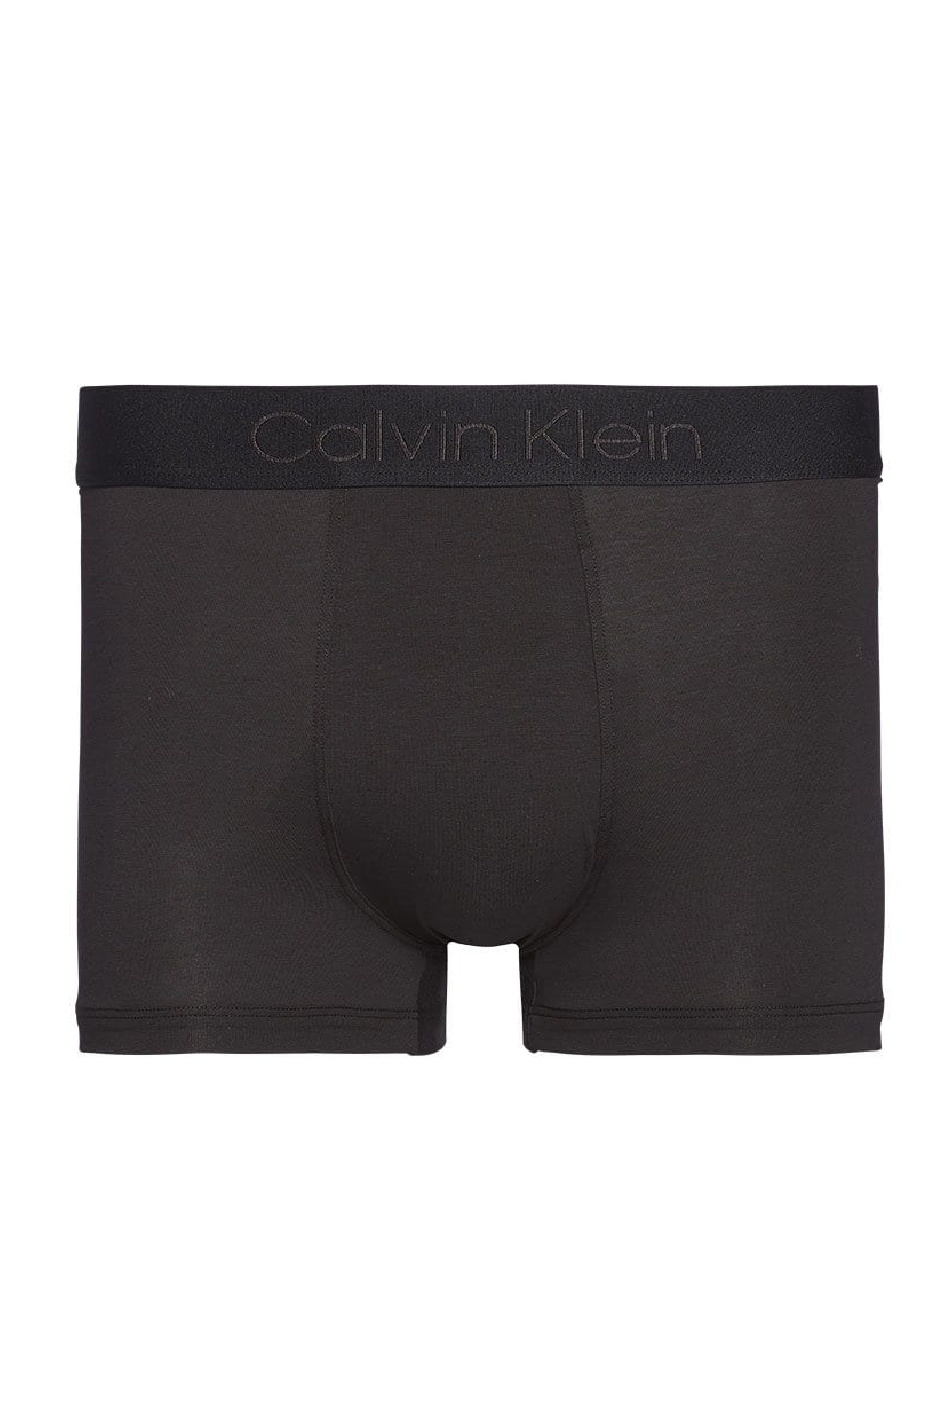 Calvin Klein Men's Low Rise Trunks